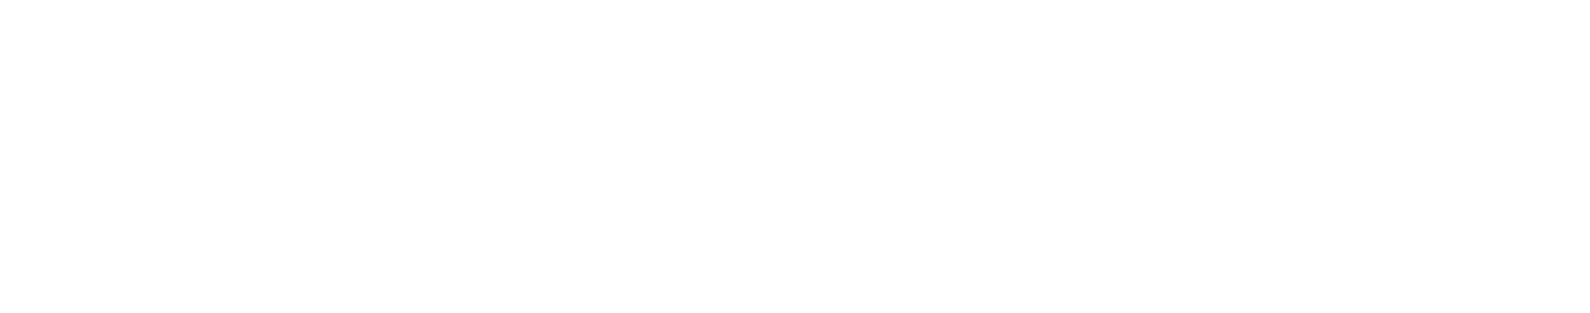 Sono logo large for dark backgrounds (transparent PNG)